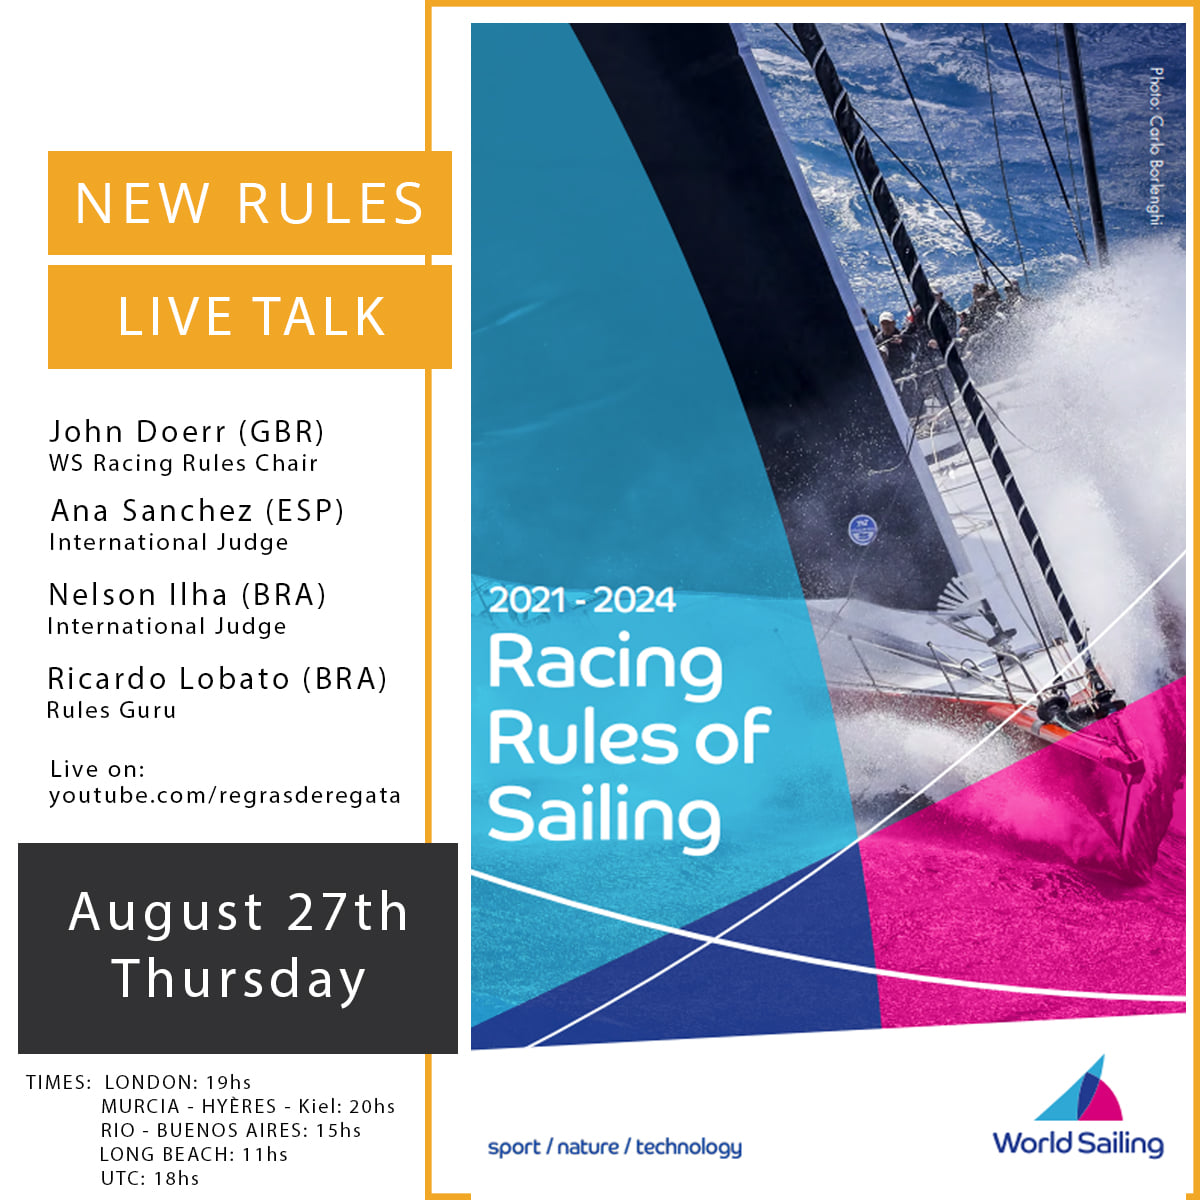 New Racing Rules of Sailing Image